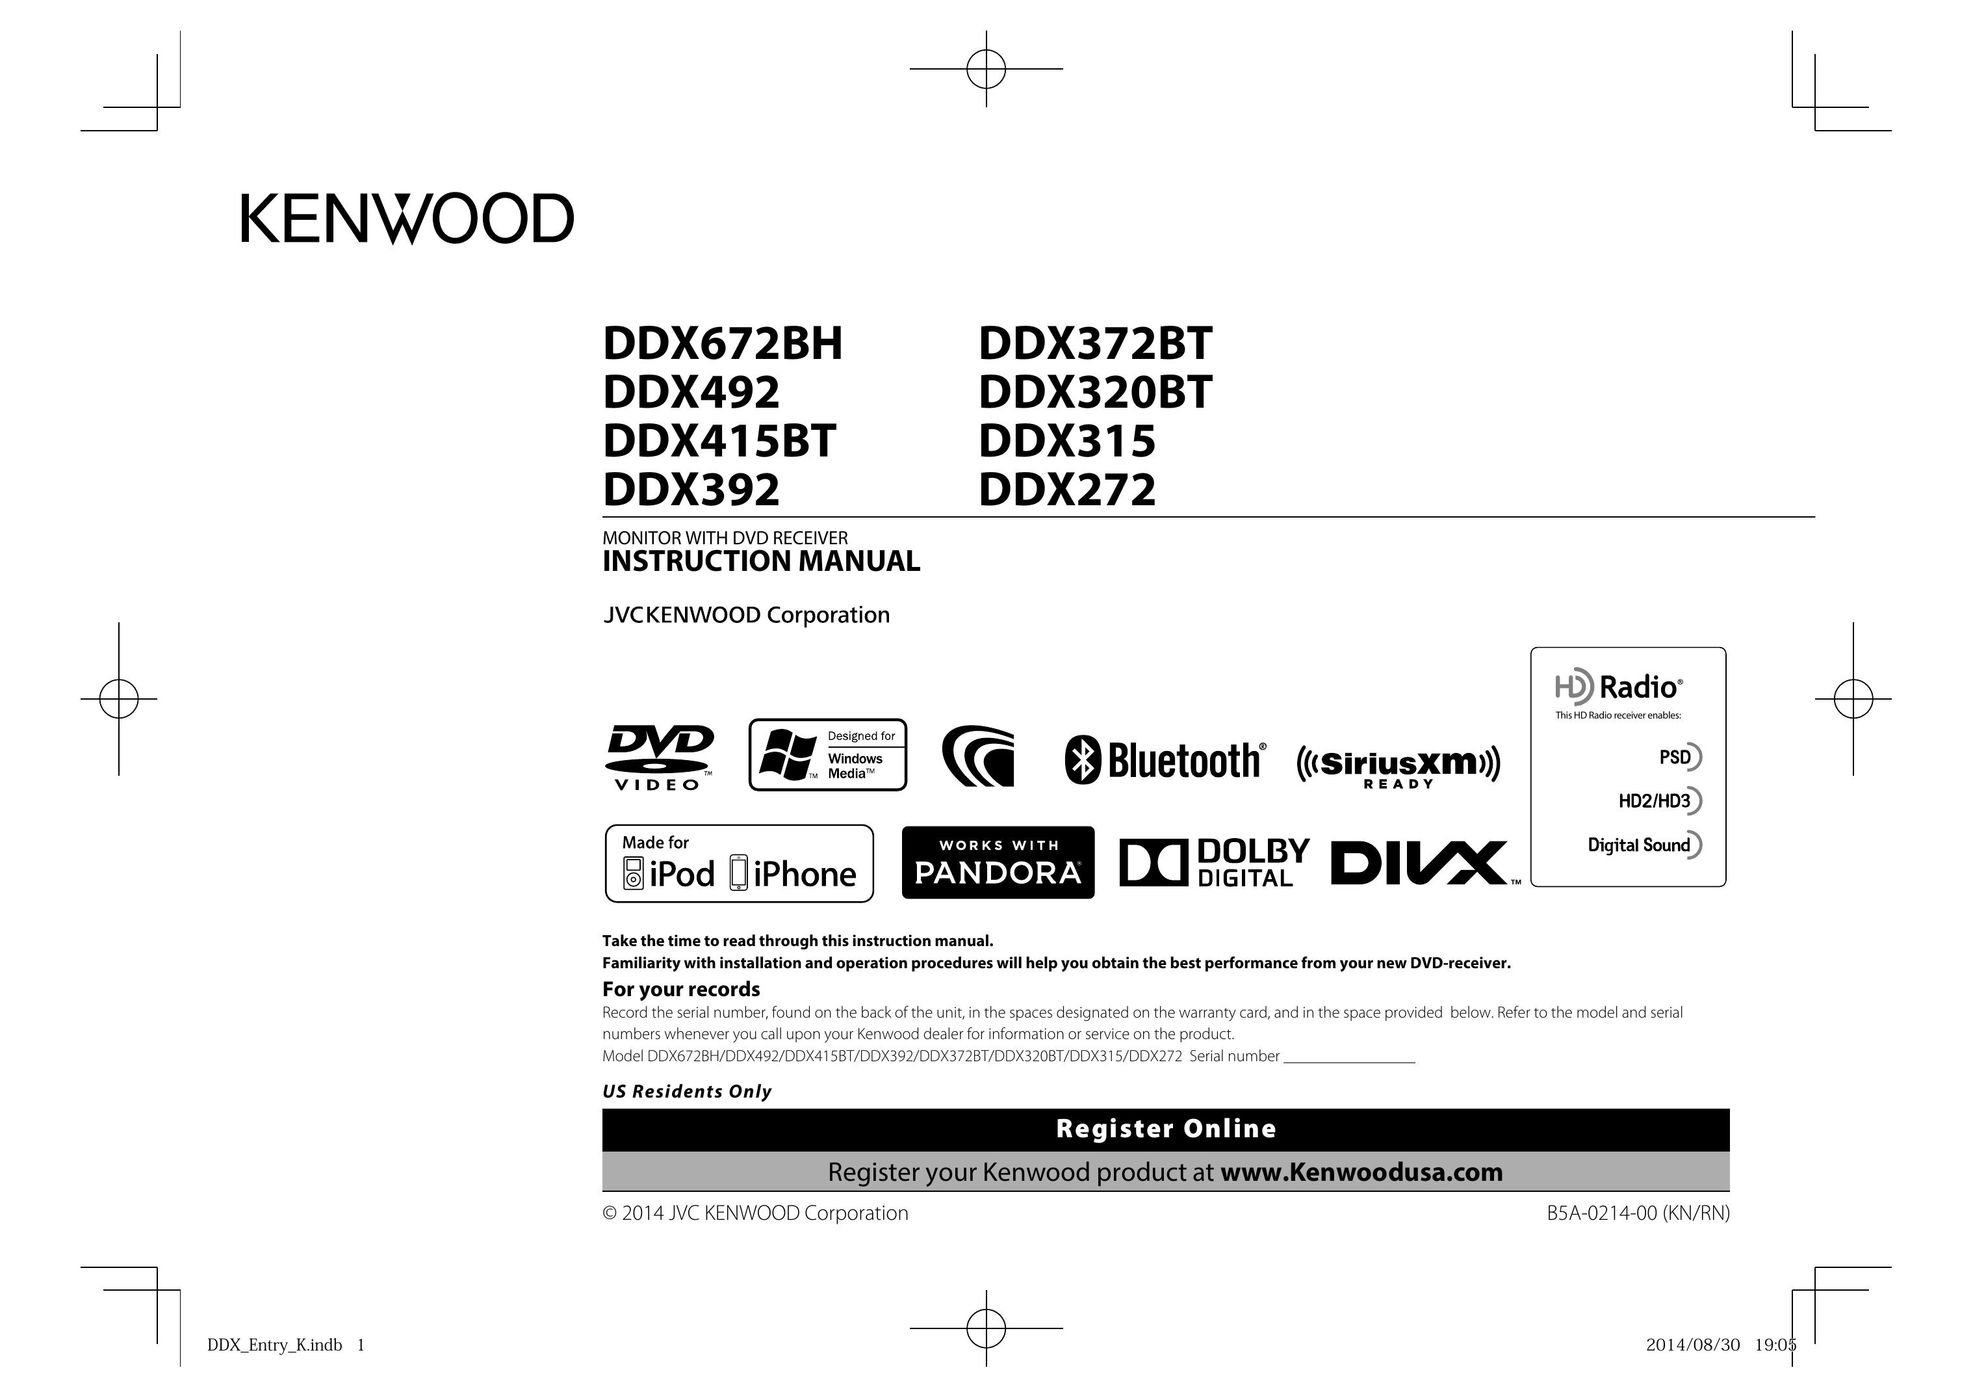 Kenwood DDX272 Car Video System User Manual